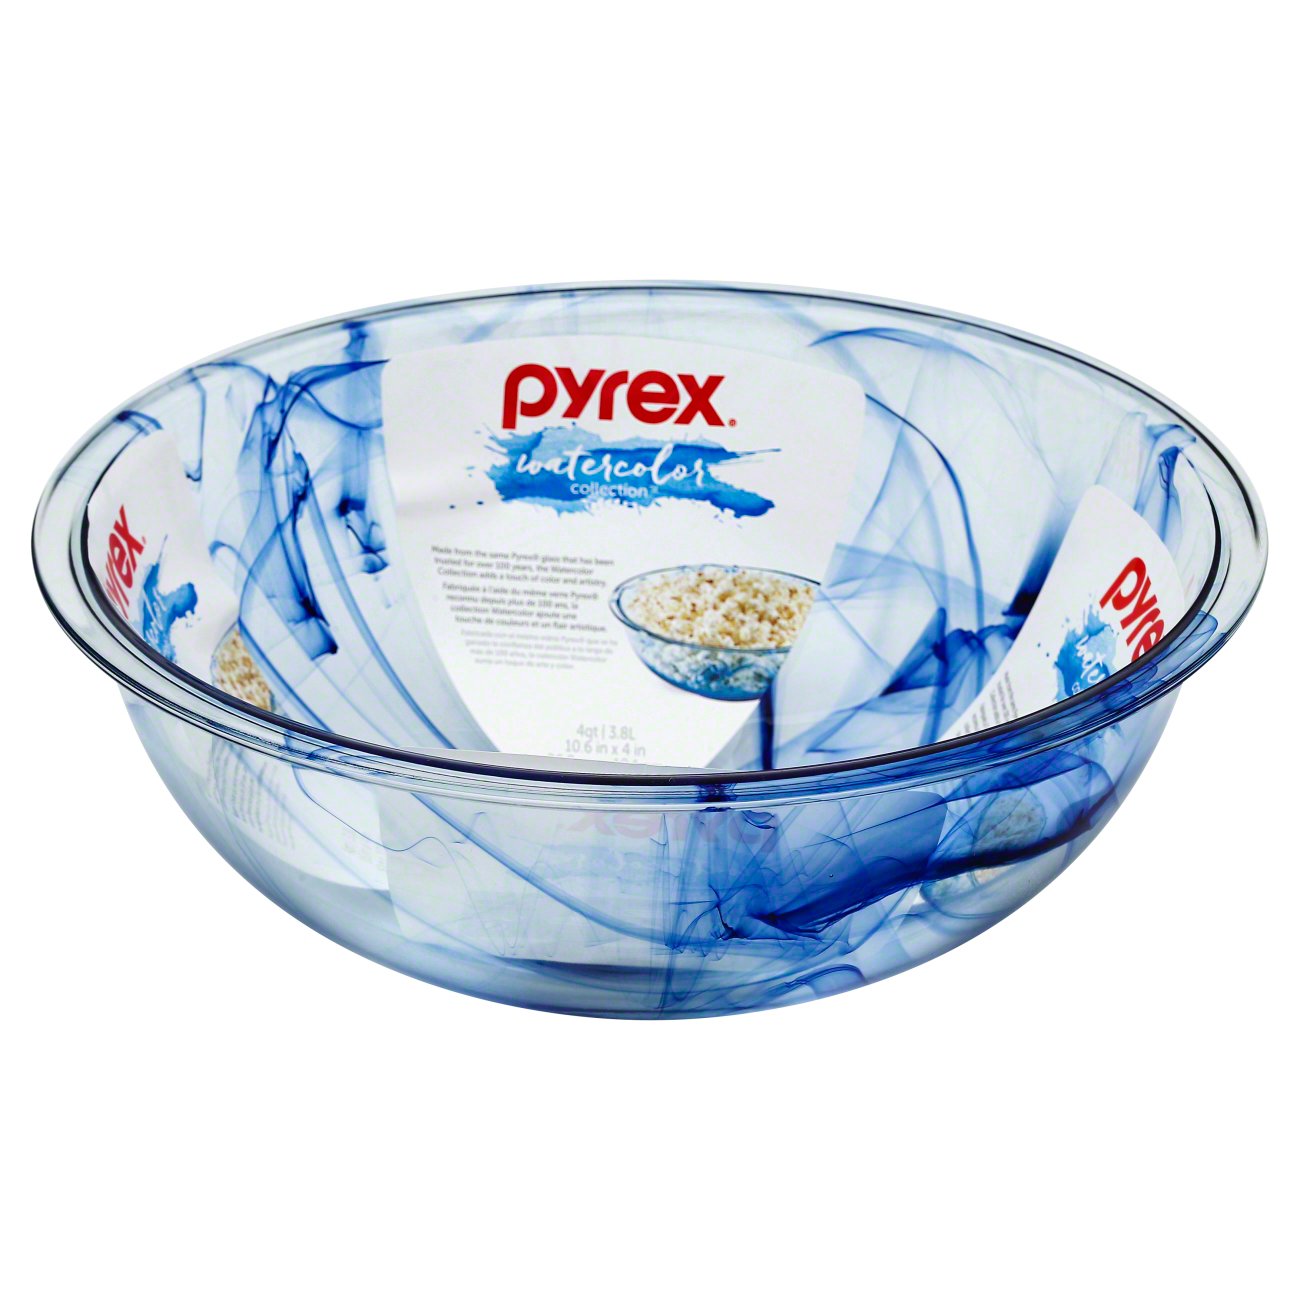 French PYREX Mixing Bowl - Classic PYREX - 0.5 Liter